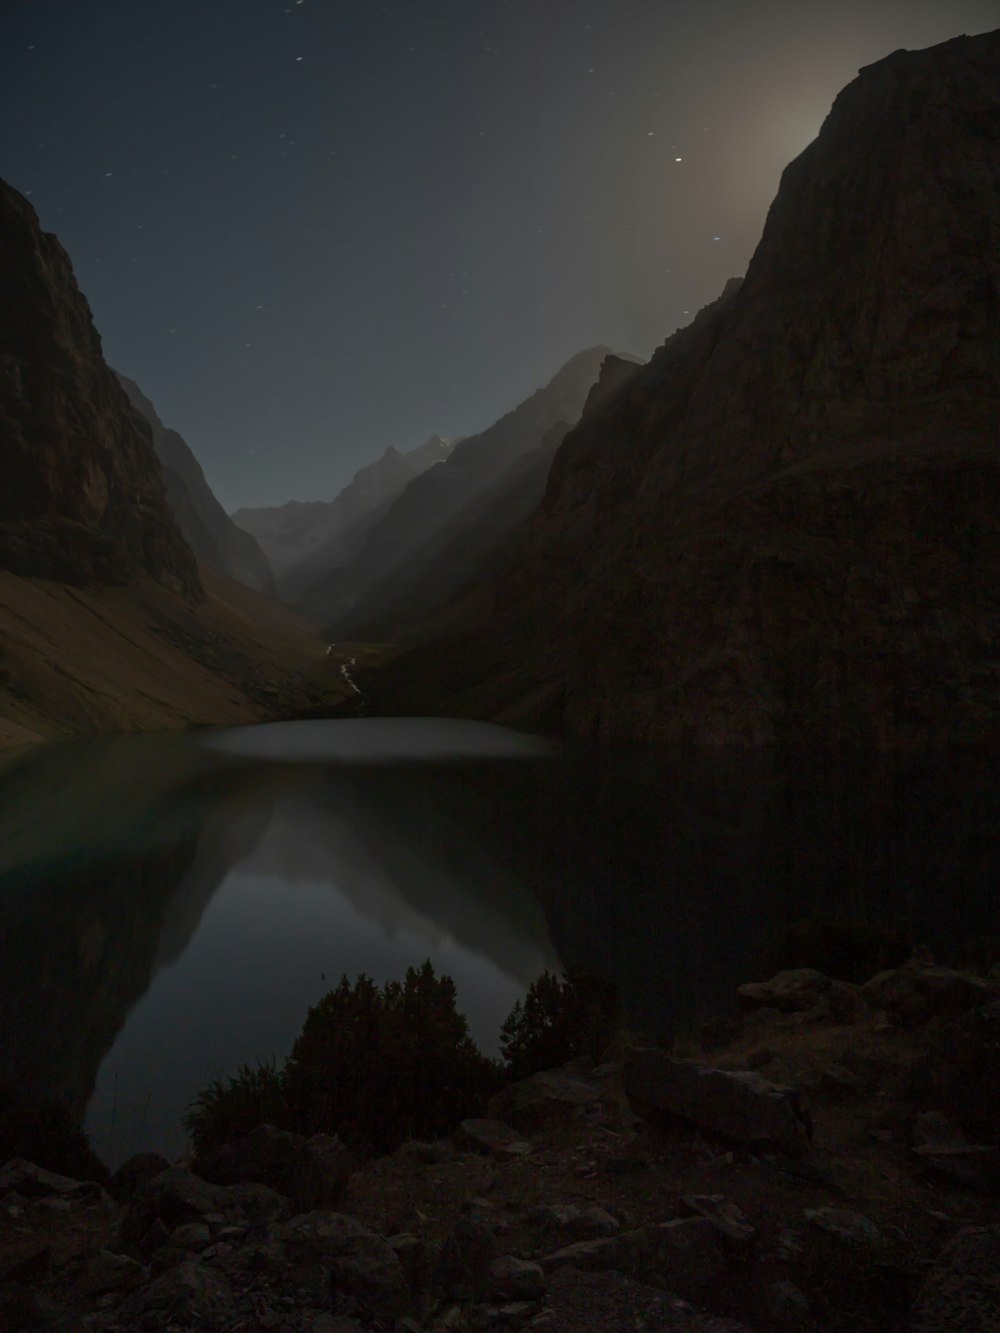 a full moon shines over a mountain lake